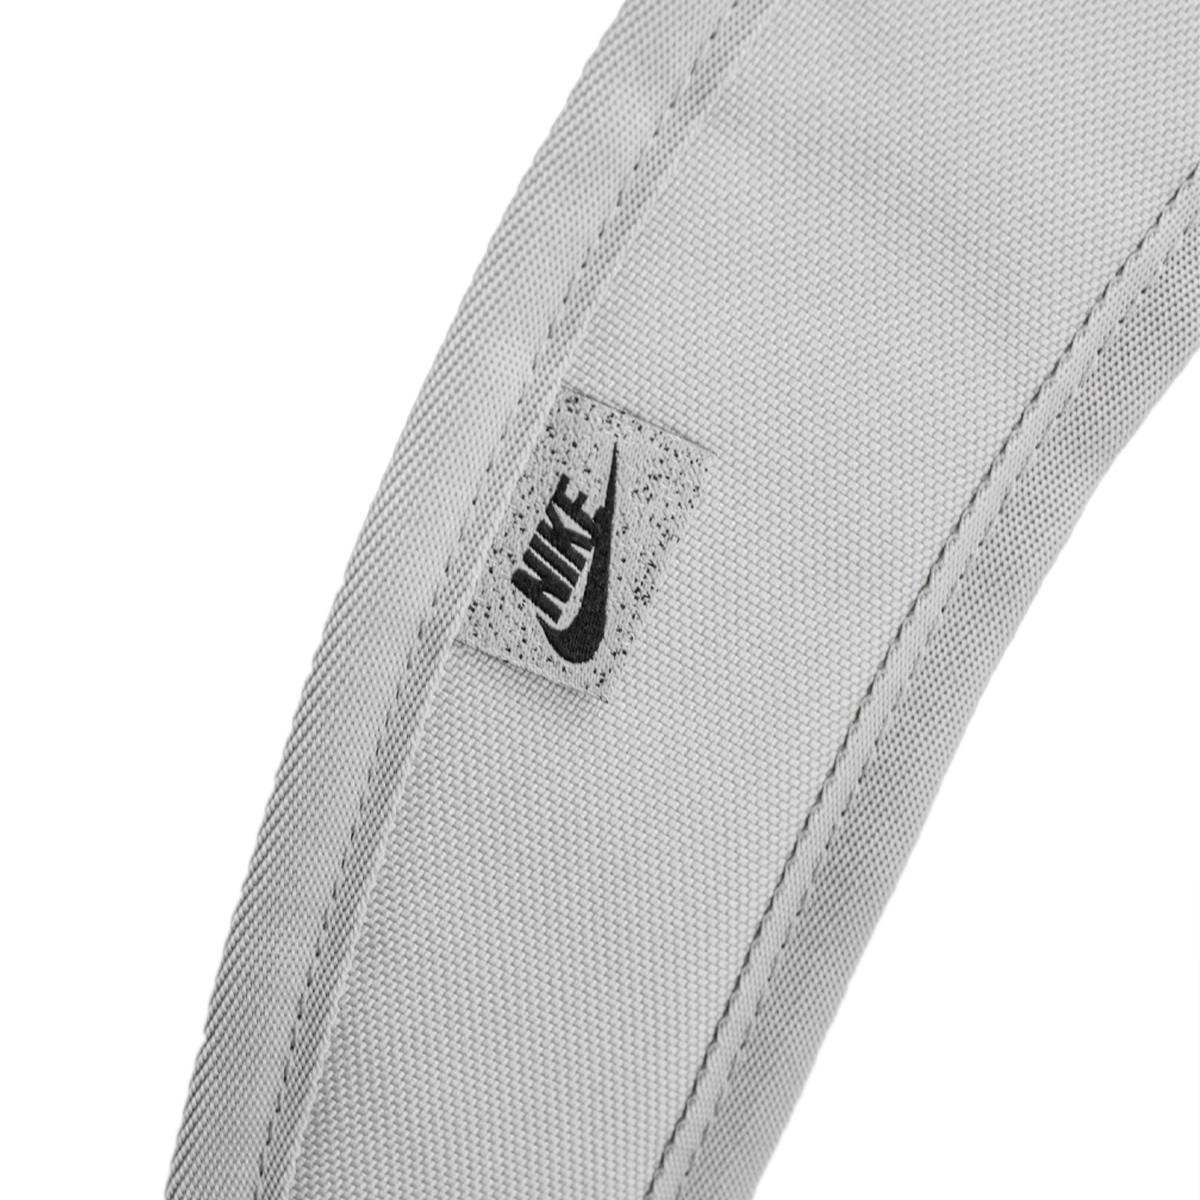 Nike Elemental Rucksack DD0559-012-